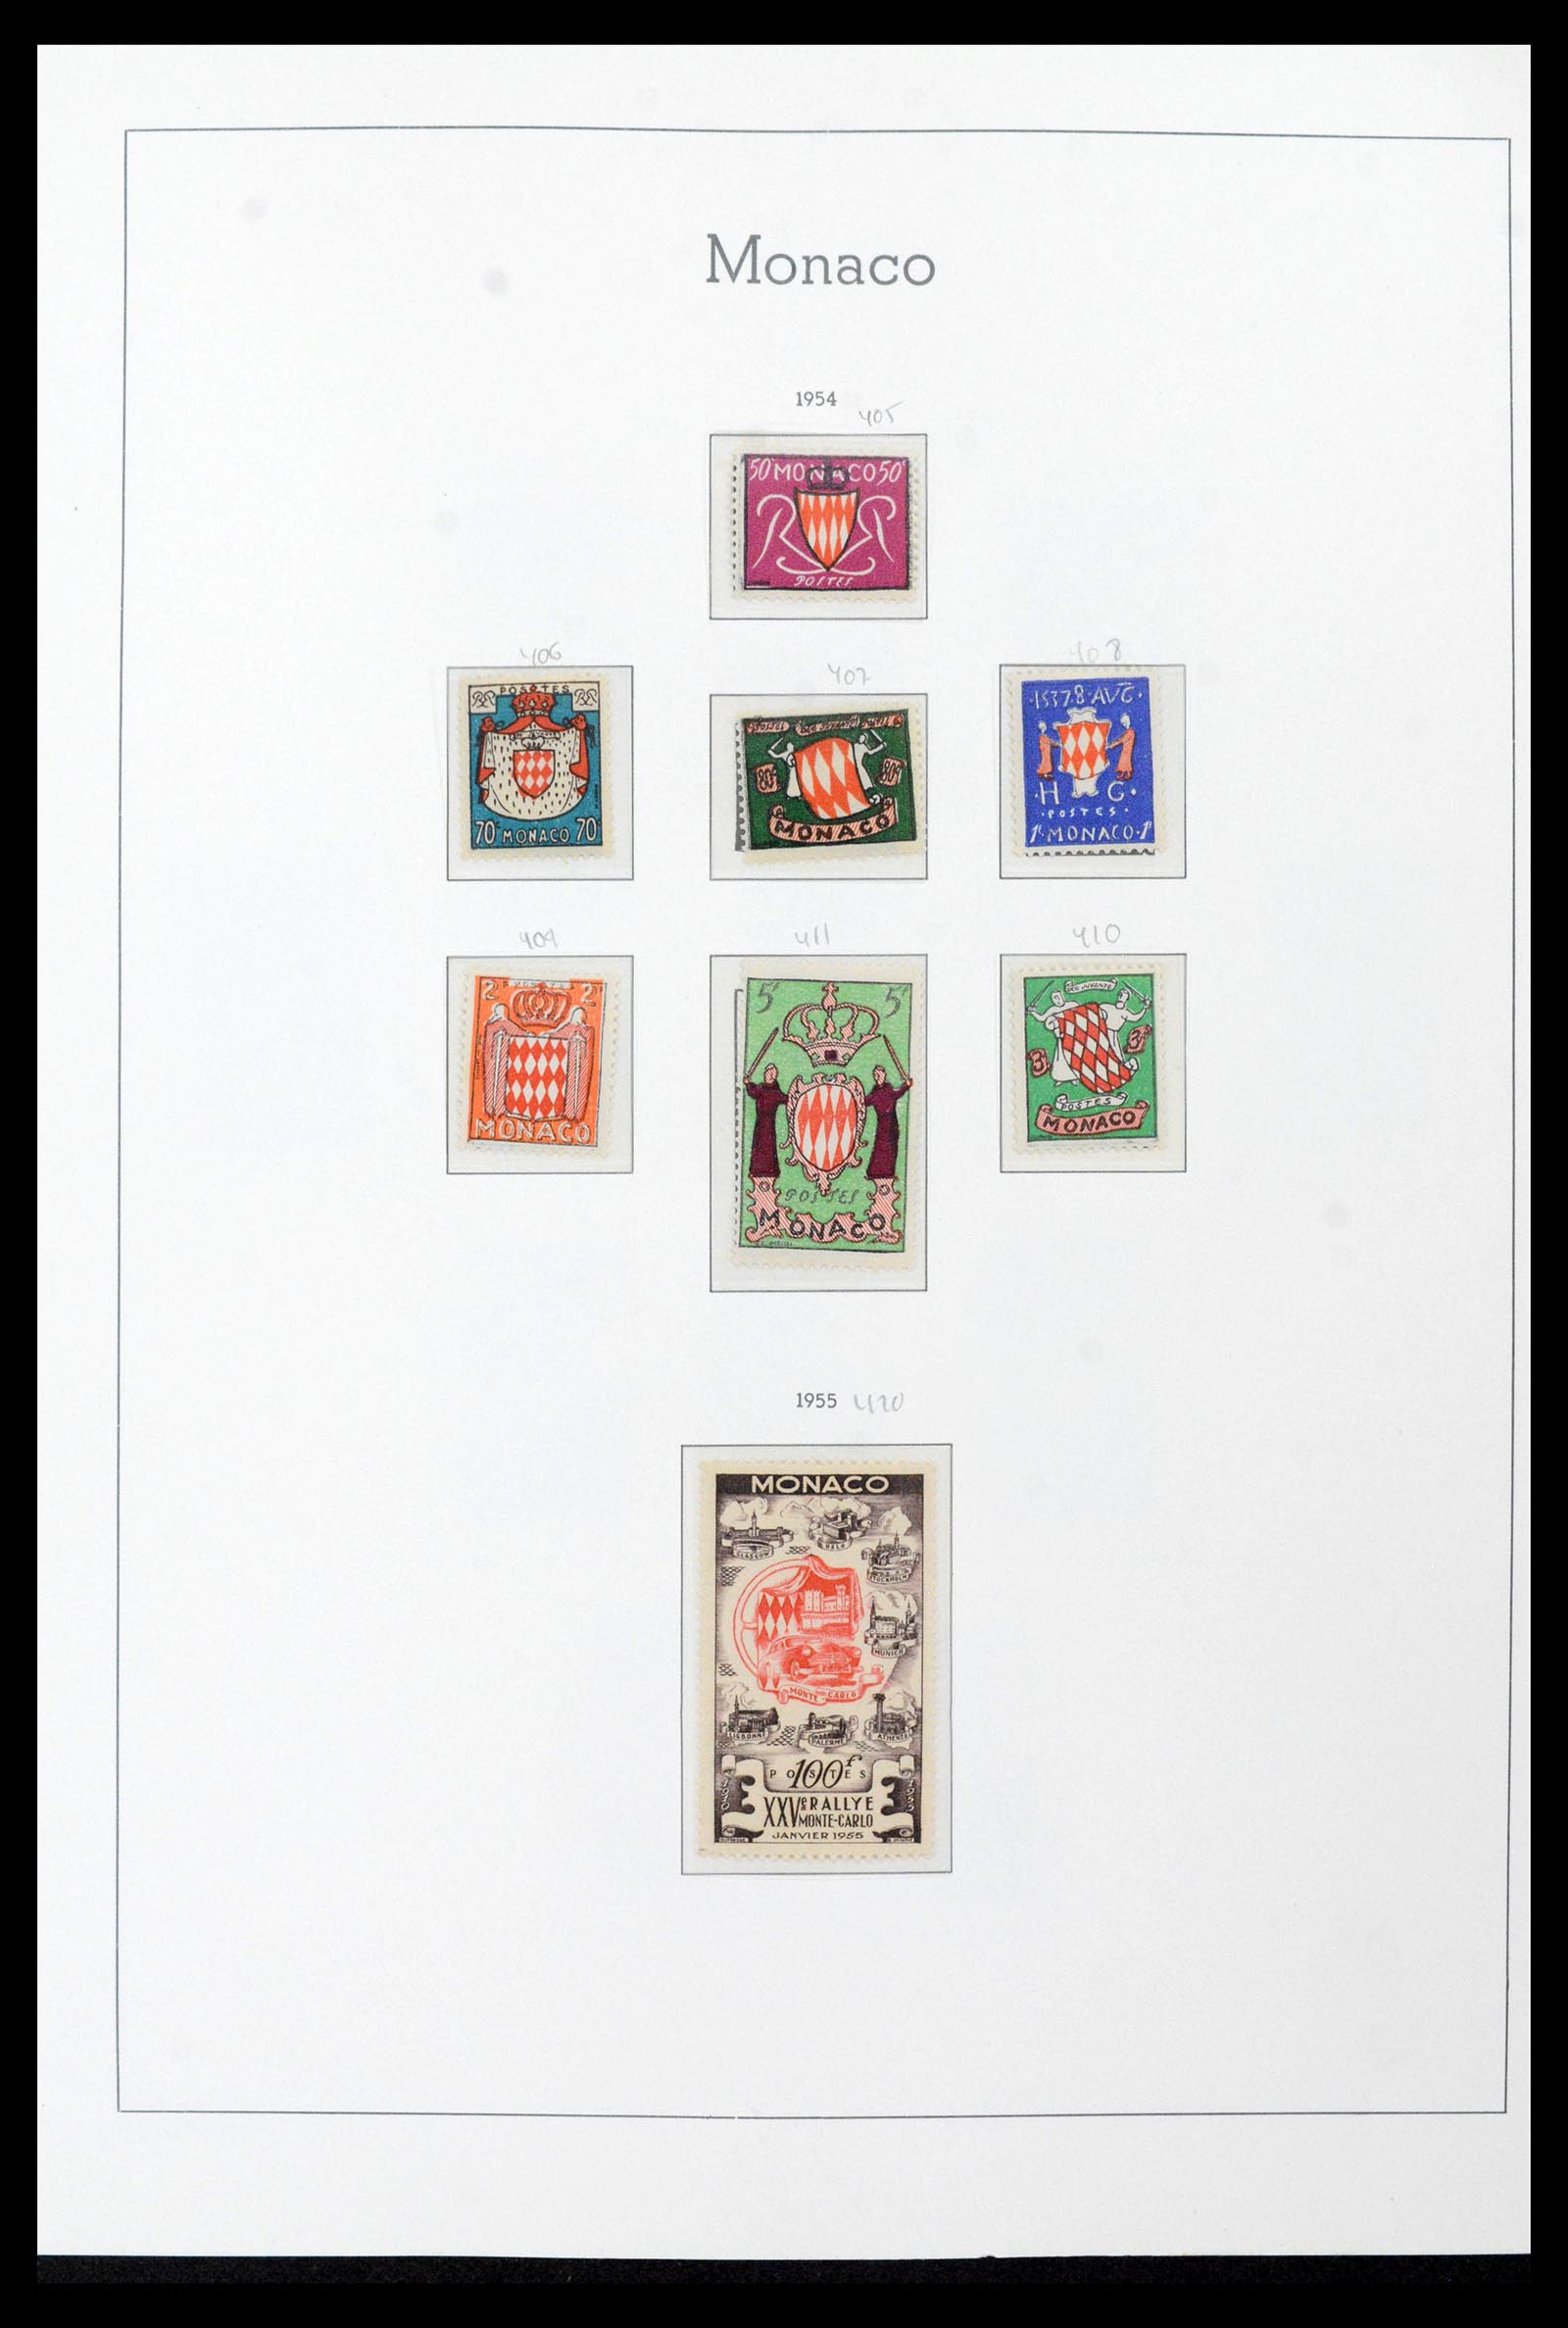 39250 0054 - Stamp collection 39250 Monaco 1885-1995.